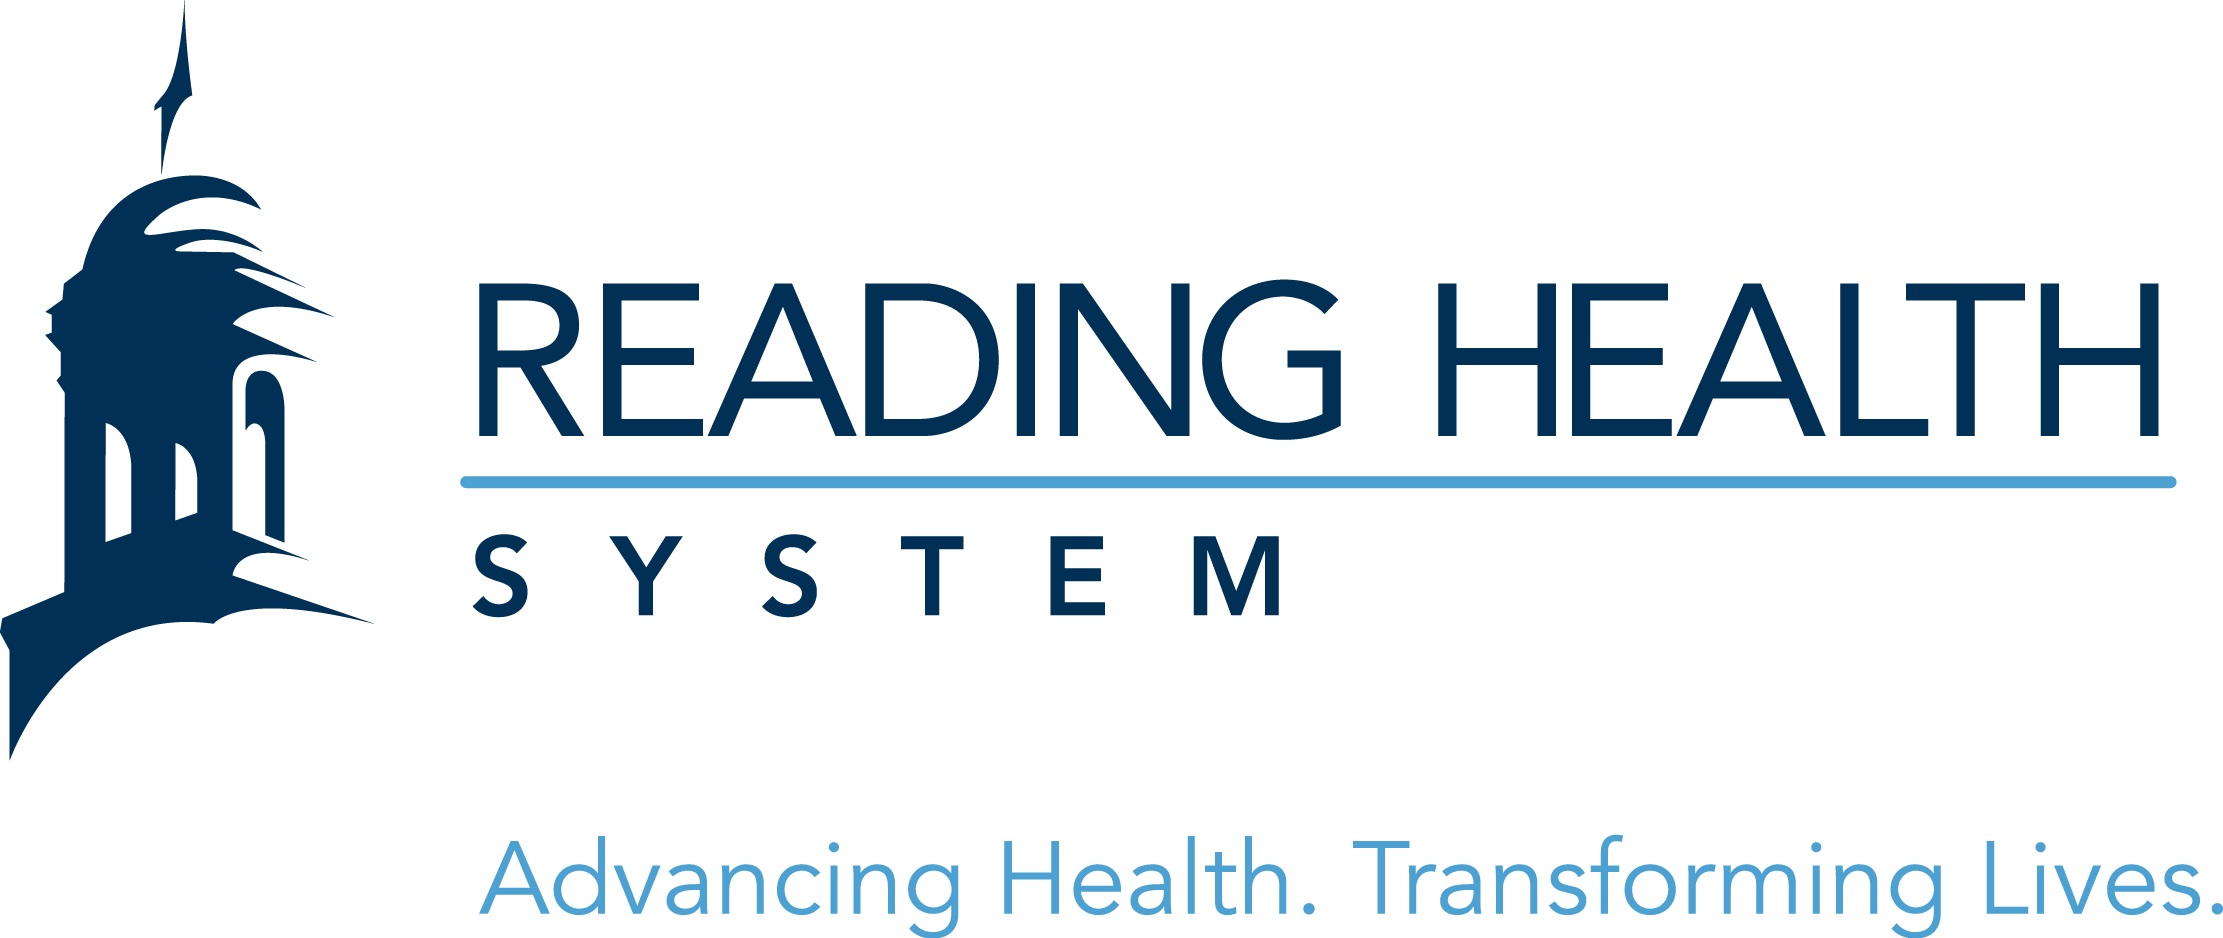 reading-health-system.jpg